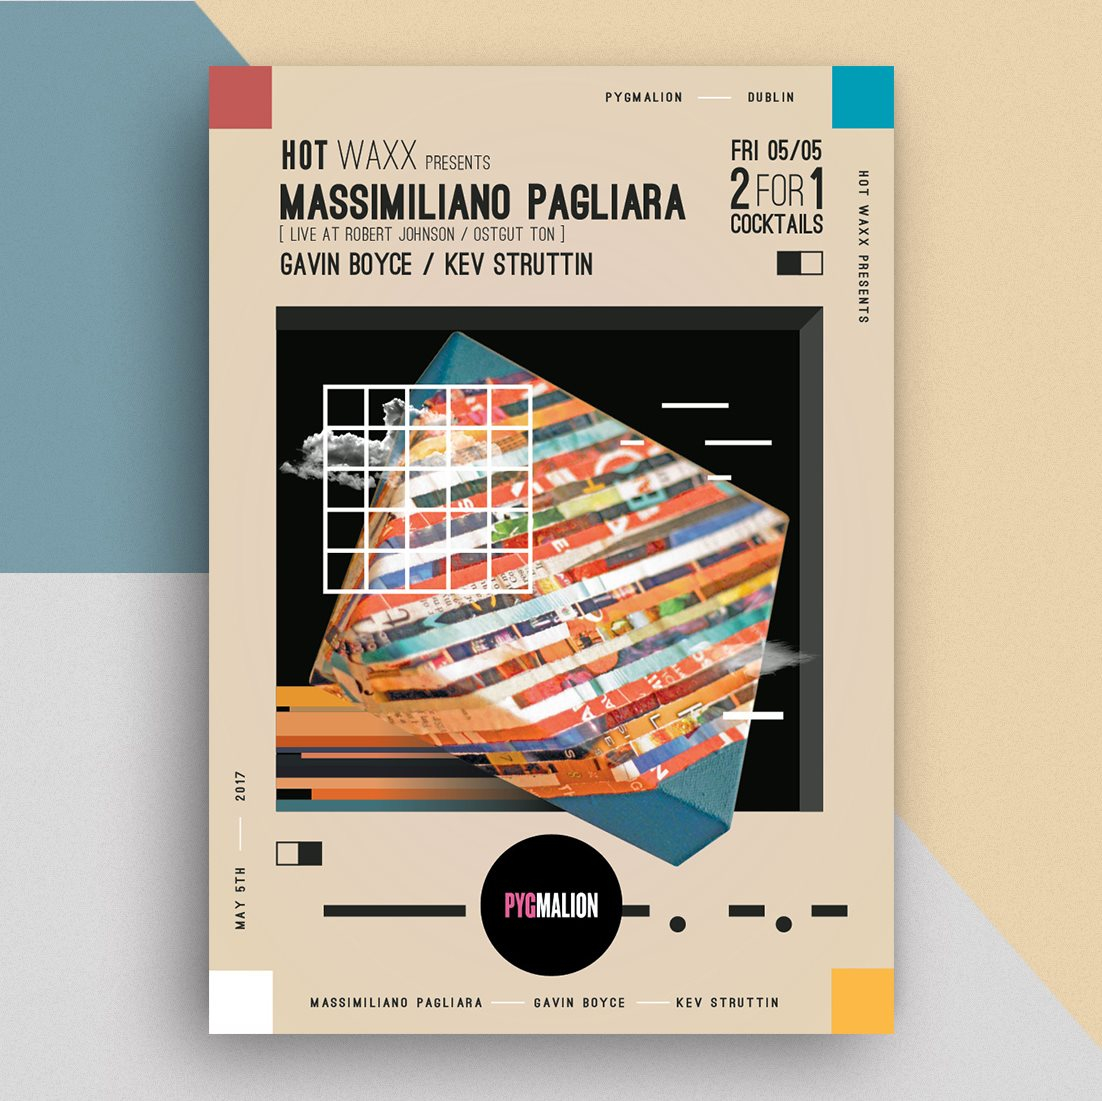 Hot Waxx presents Massimiliano Pagliara - Flyer front